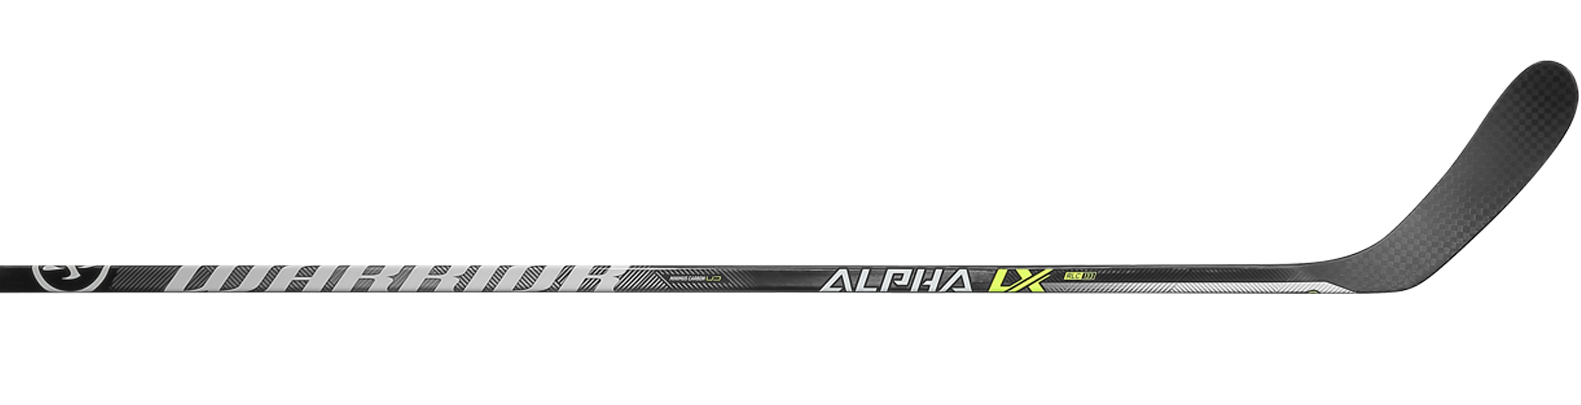 Warrior Alpha LX 30 Intermediate Hockey Stick